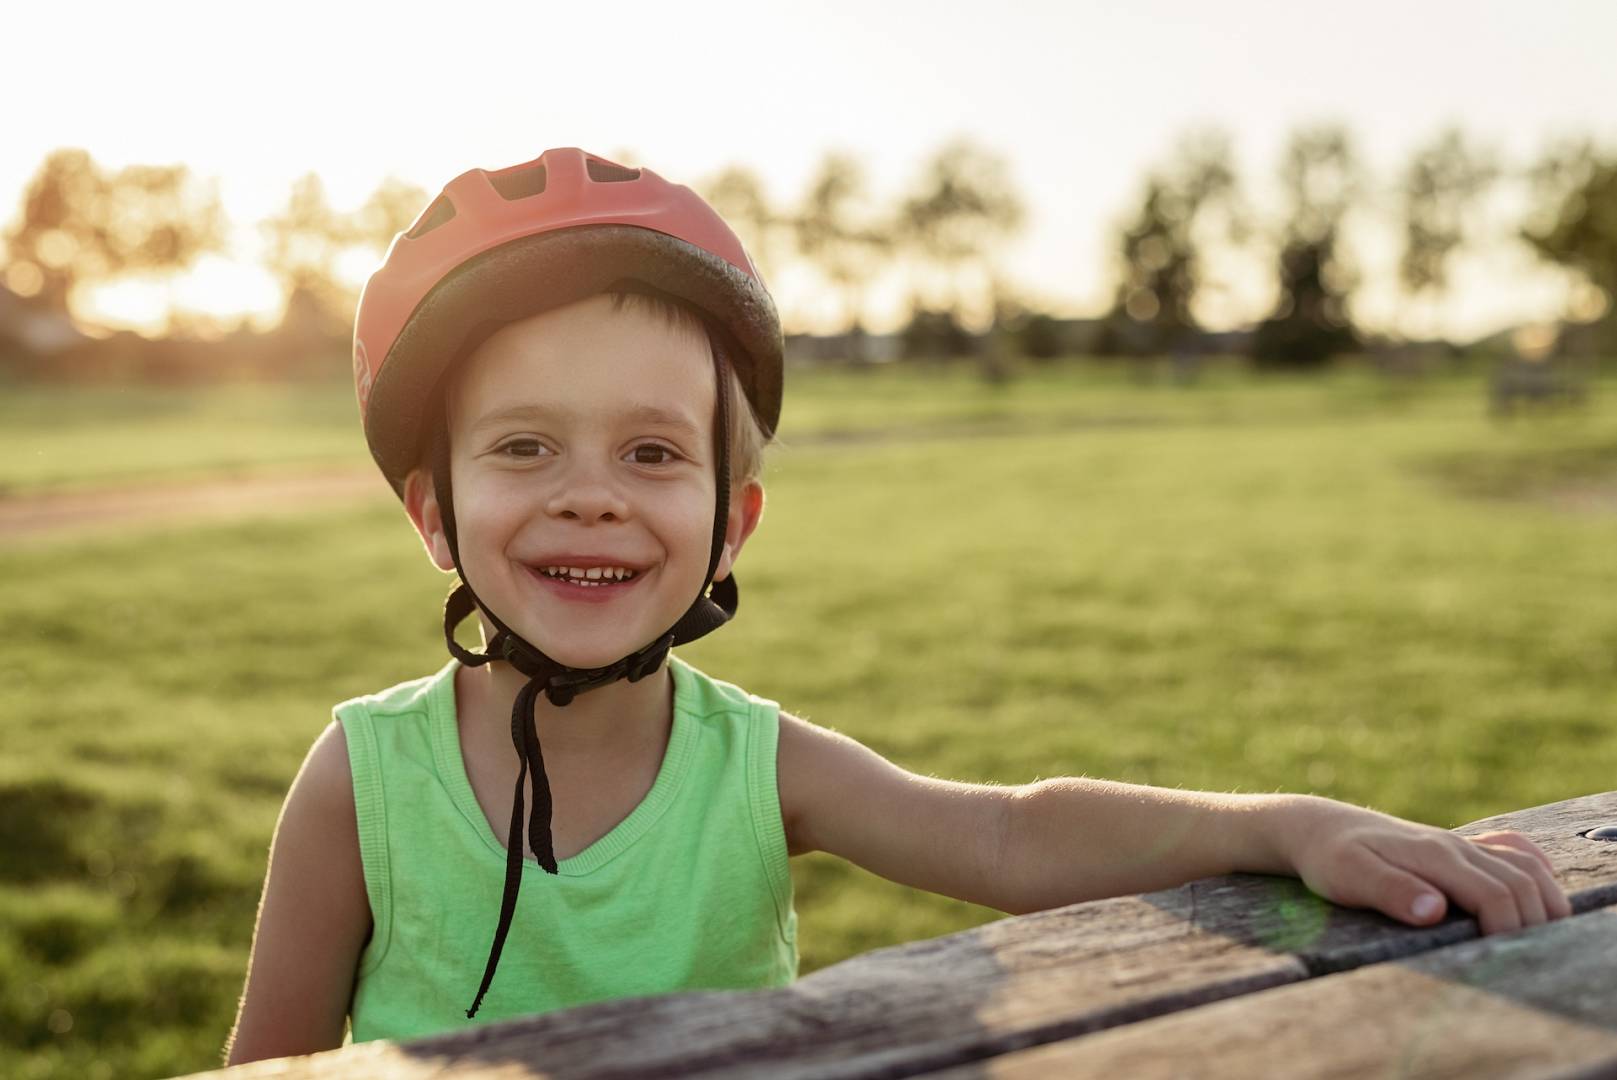 little-boy-in-a-bicycle-helmet-sitting-at-a-picnic-2022-11-16-16-03-52-utc.jpg